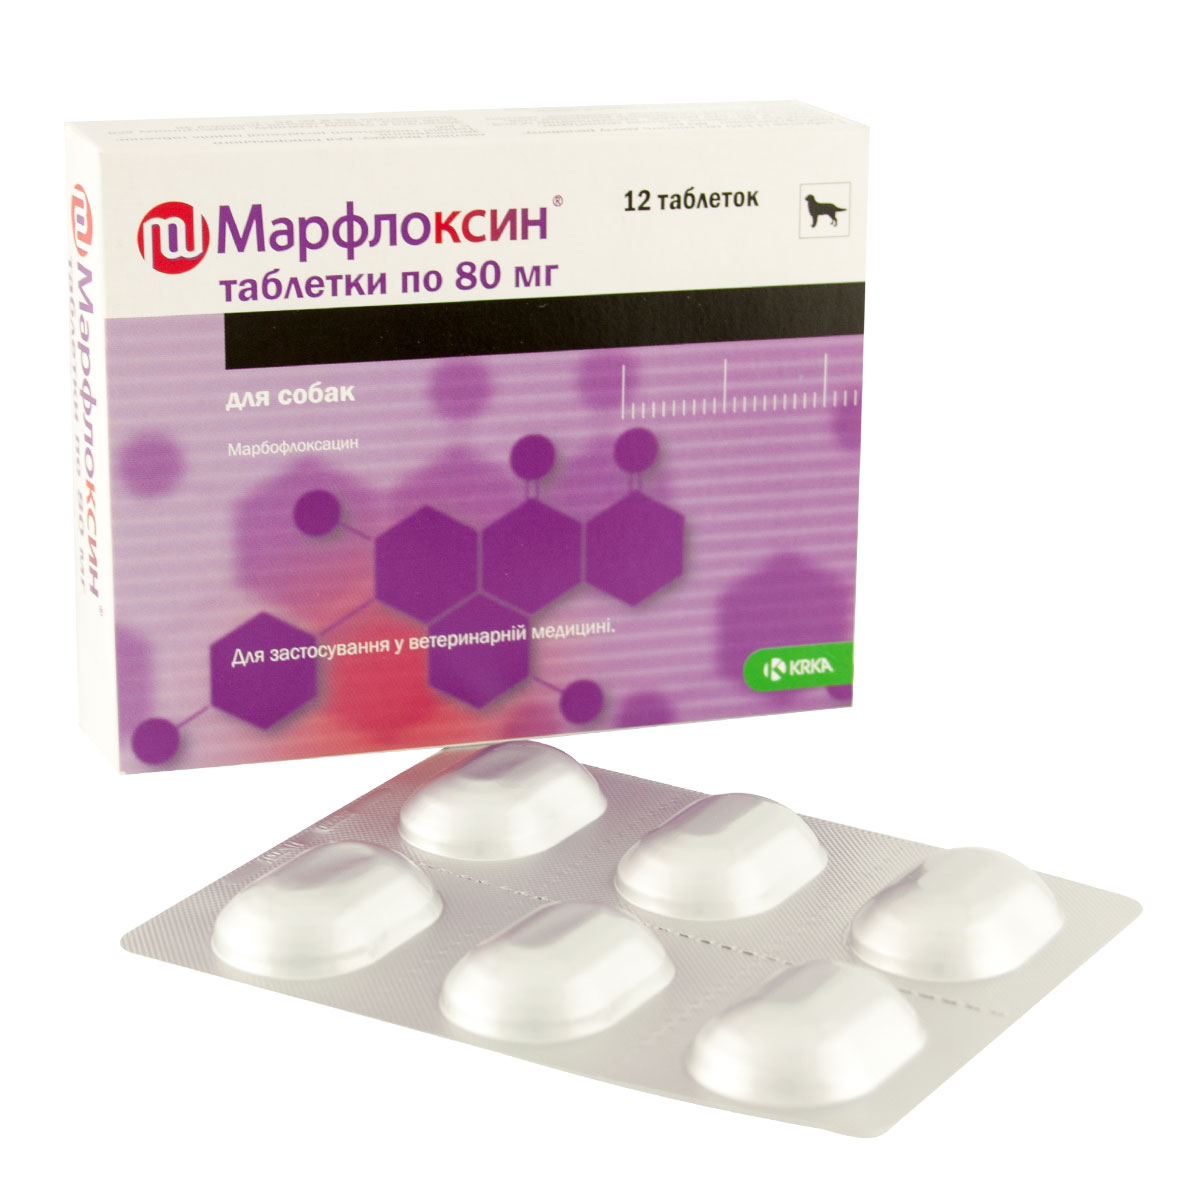 Марфлоксин 80 мг. 12 шт., KRKA от зоомагазина Дино Зоо